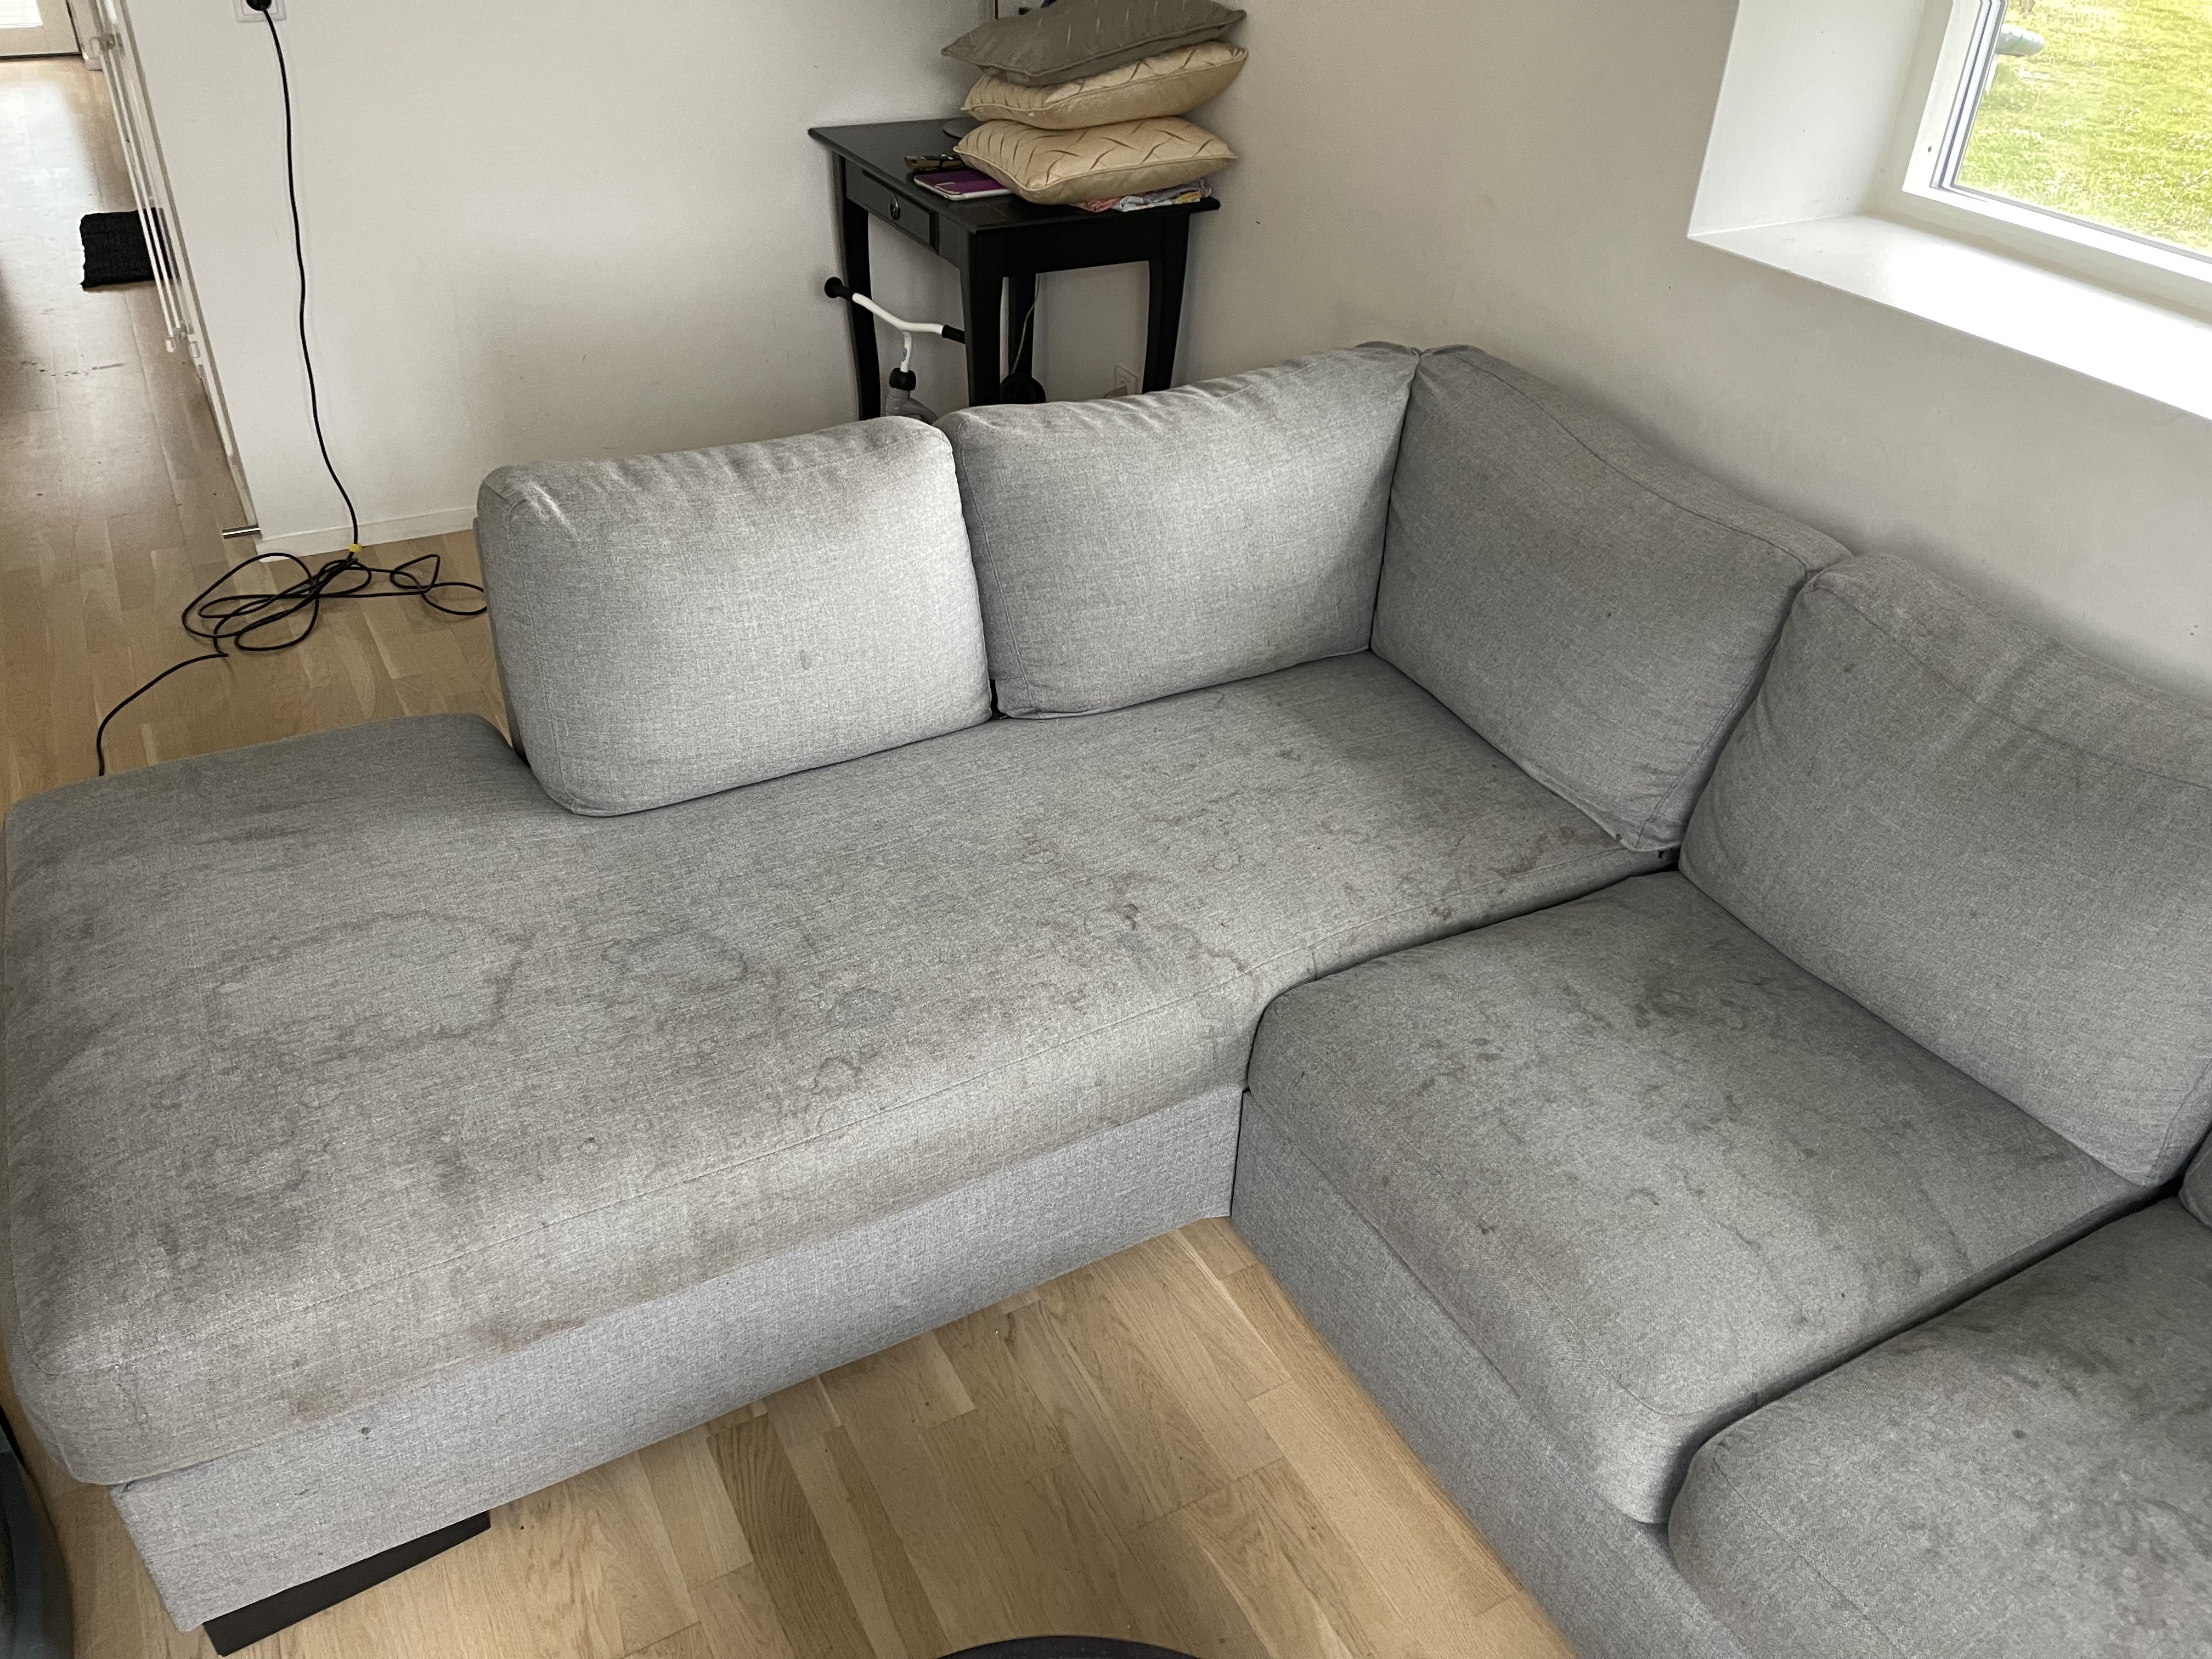 Extrem snavset sofa